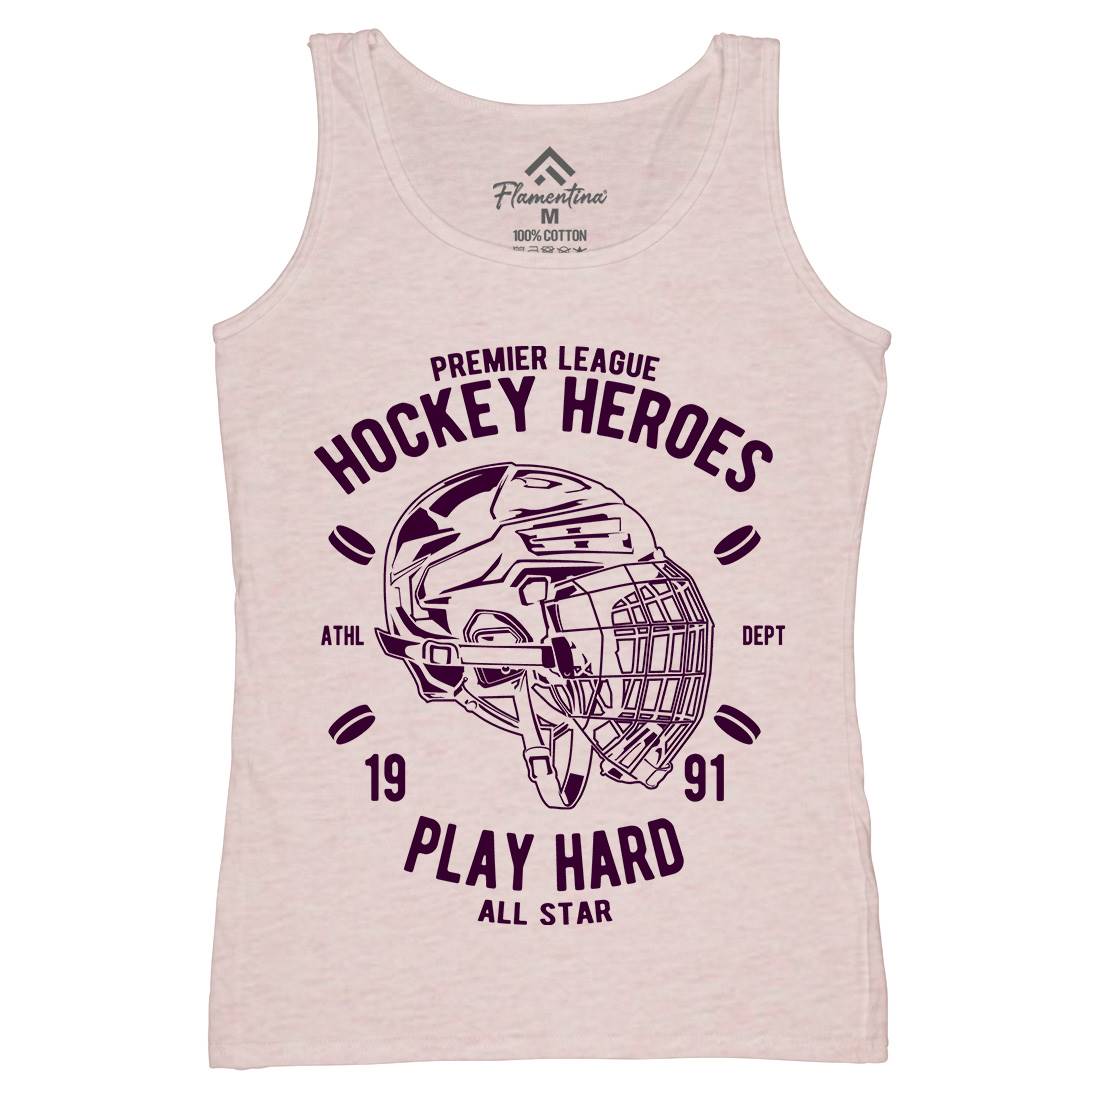 Hockey Heroes Womens Organic Tank Top Vest Sport A064